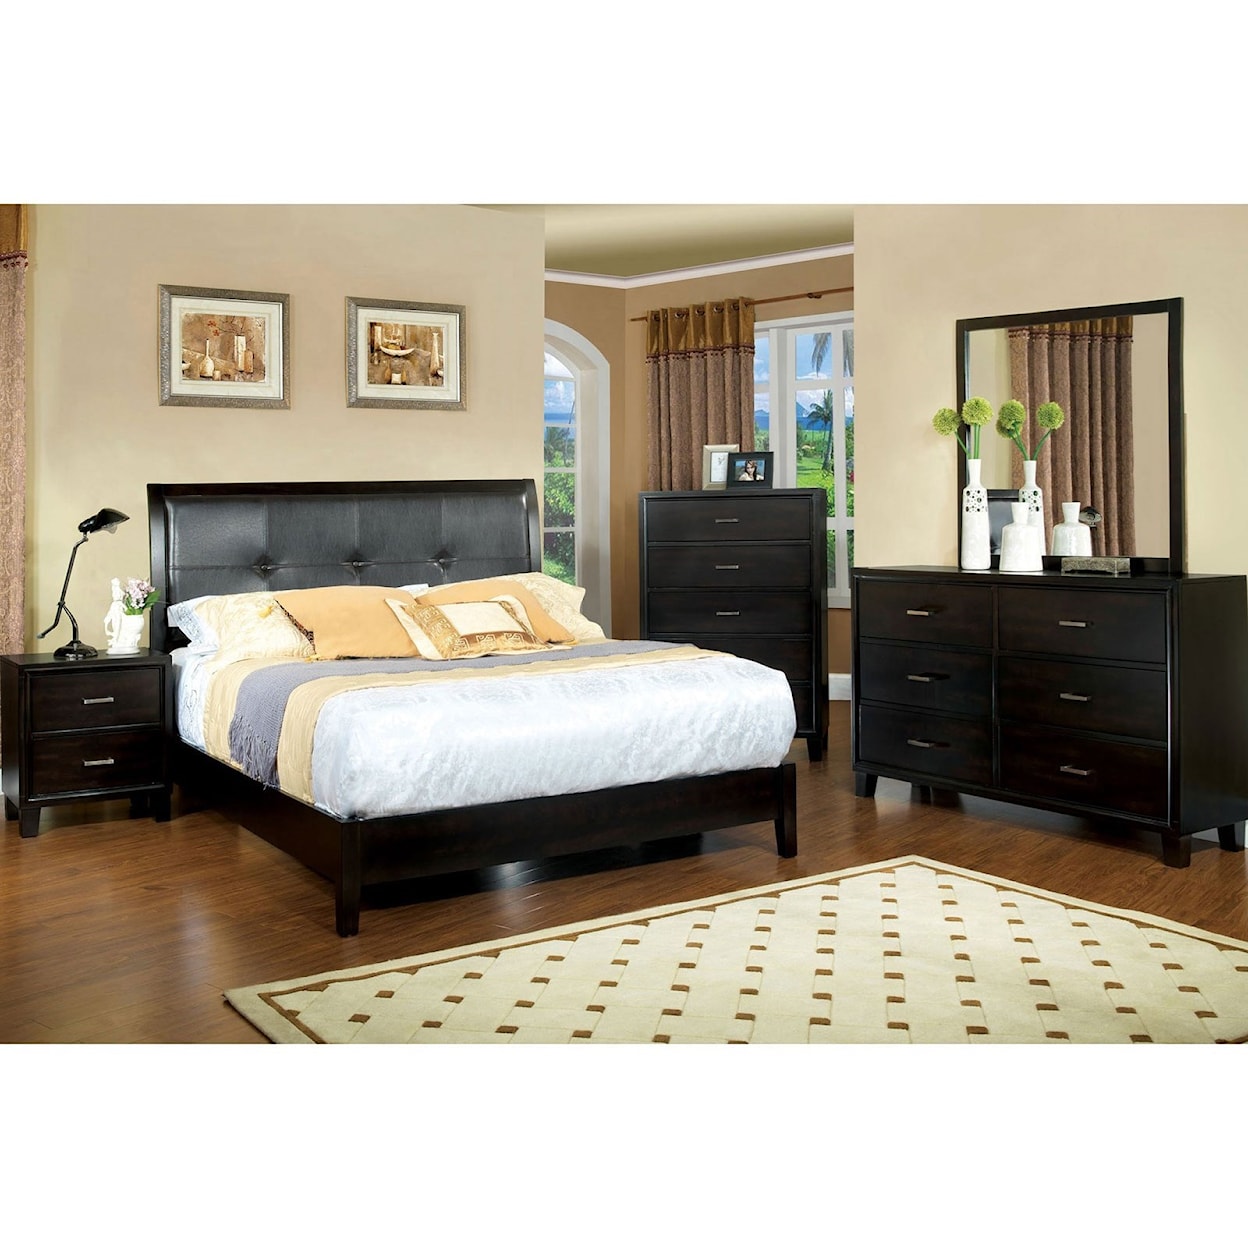 Furniture of America Enrico Full Bed